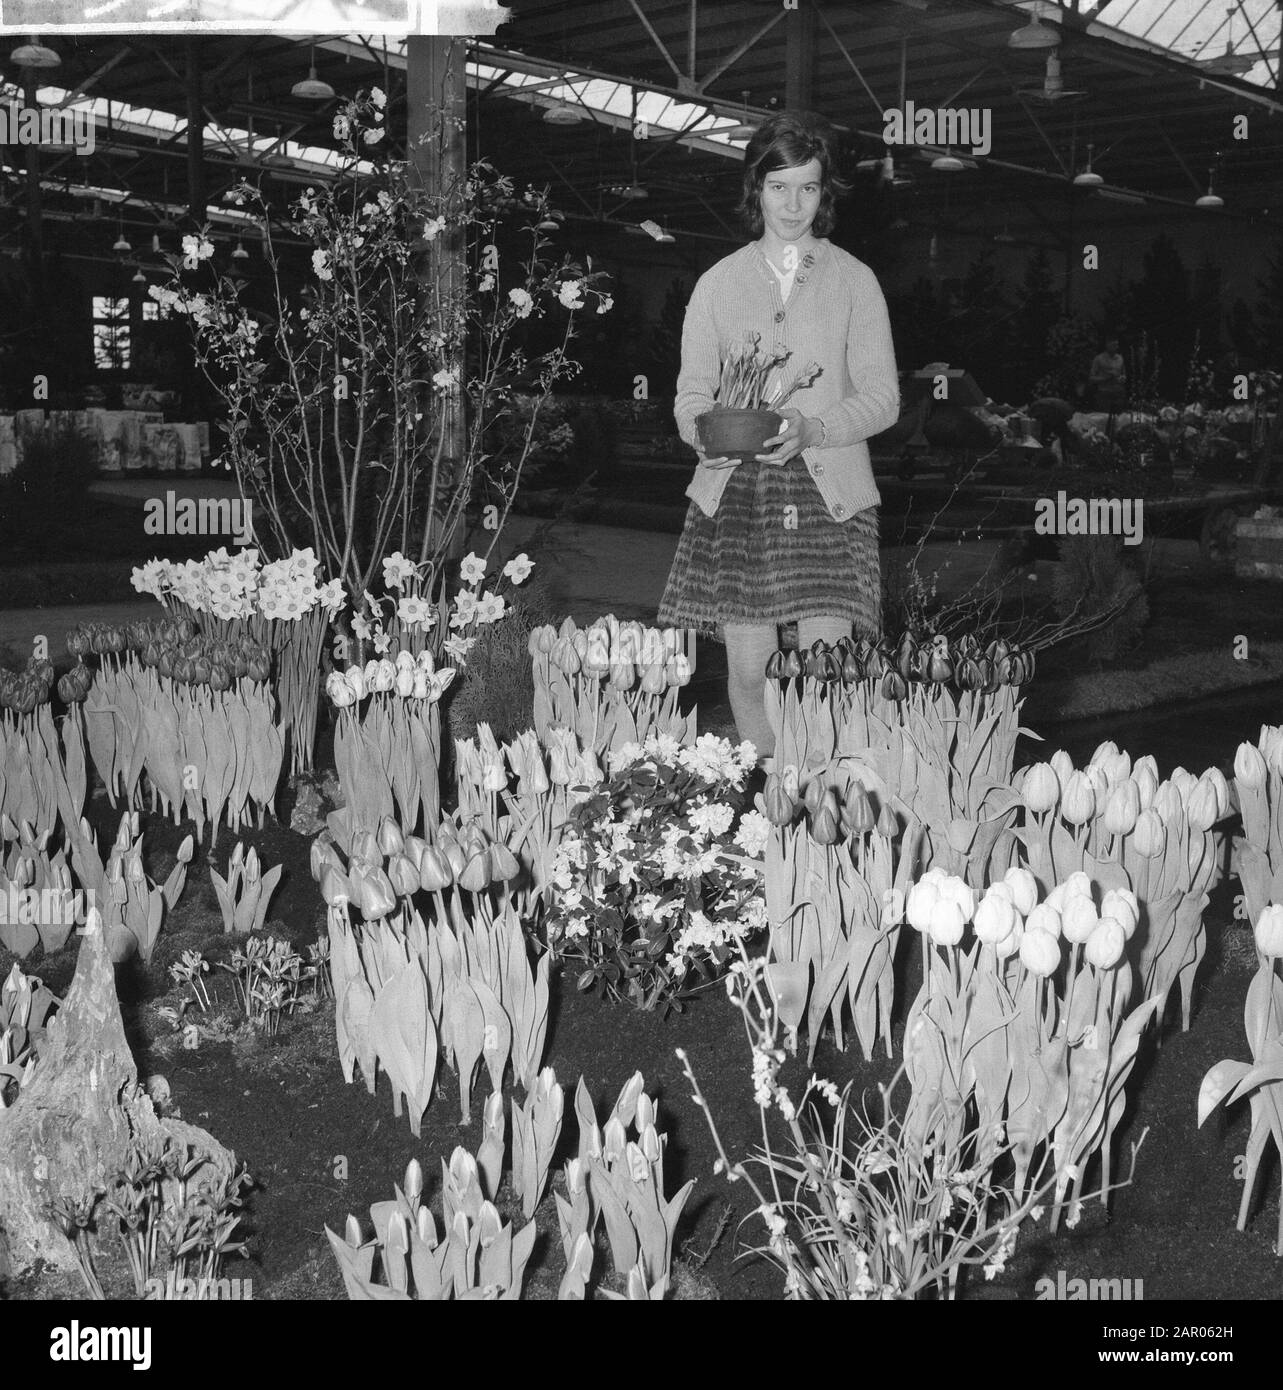 Westfriese Flora 1962 (about 700 bulbous plants) Date: 19 February 1962 Keywords: Bulbous plants Institution name: Flora Stock Photo